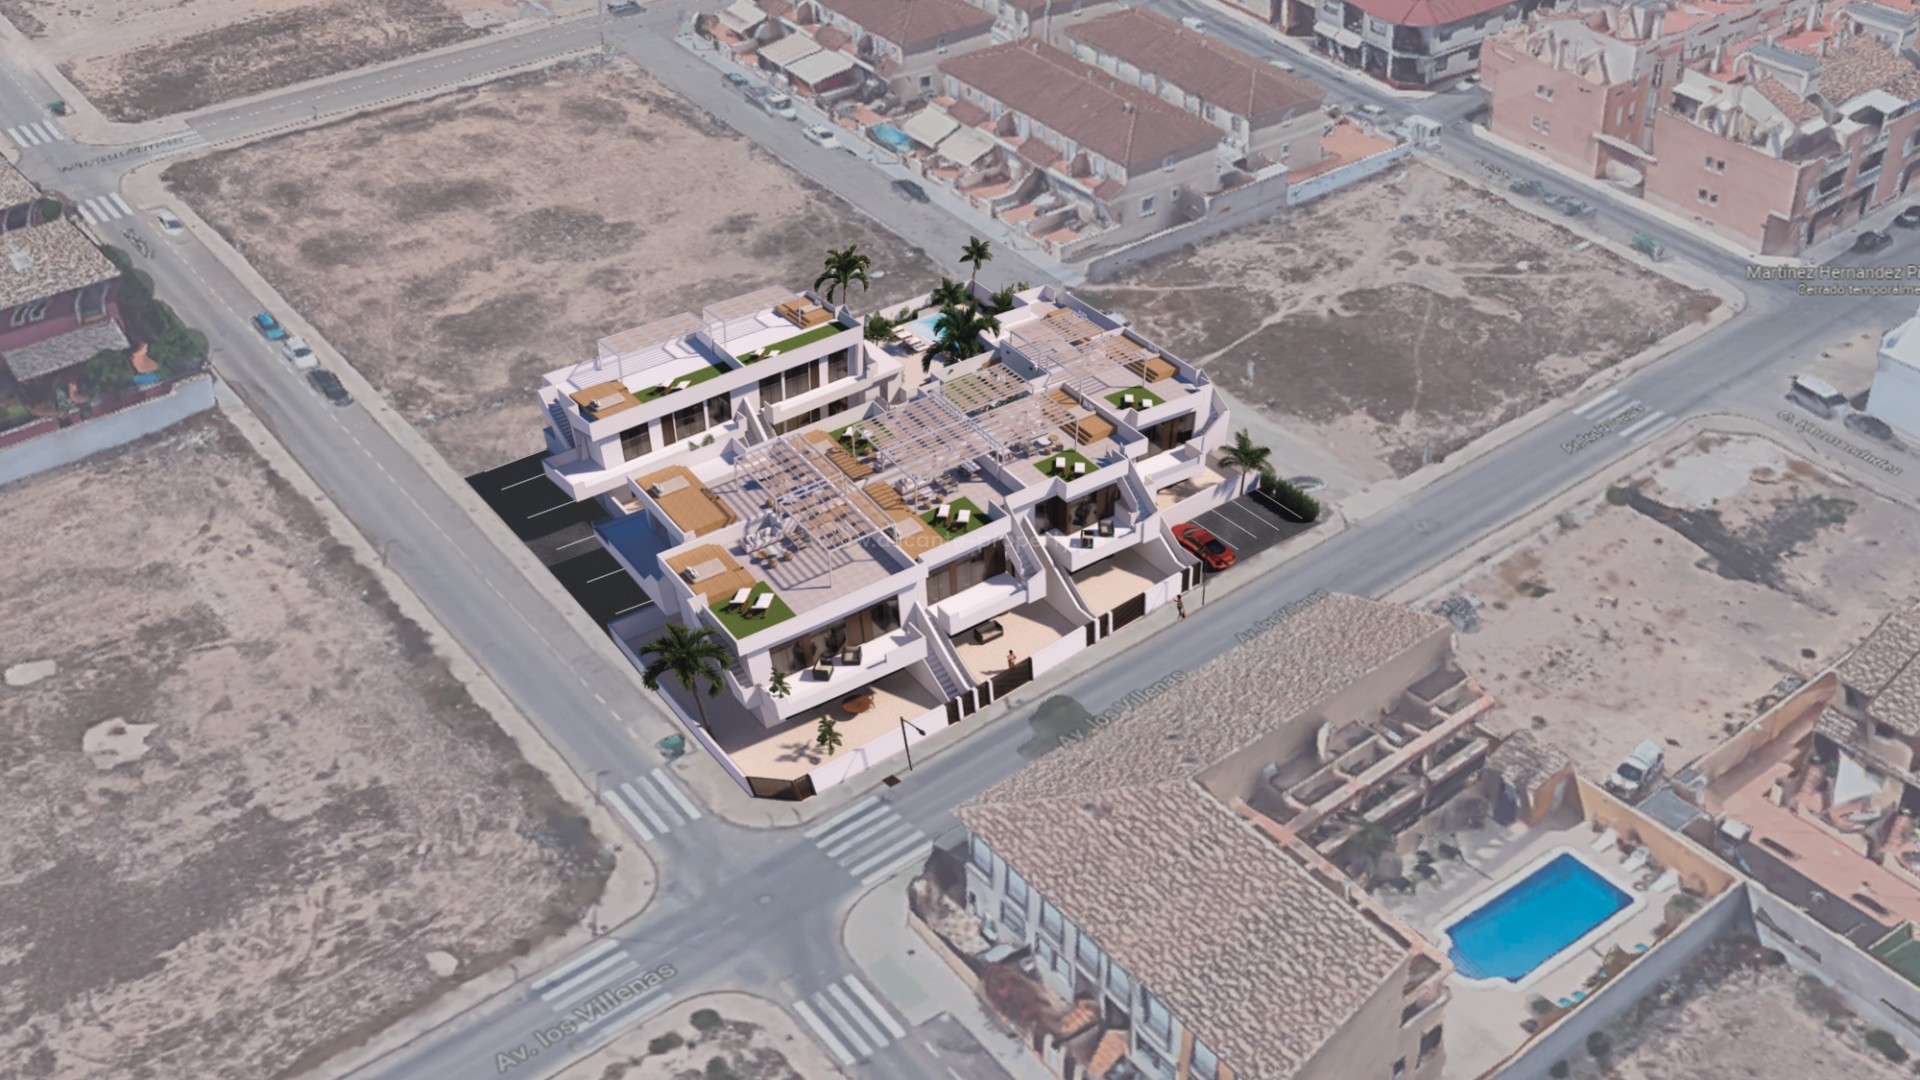 Exclusive residential complex in Pilar de La Horadada, 2/3 bedrooms, 2 bathrooms, large solarium. Great shared pool. Short drive to golf courses